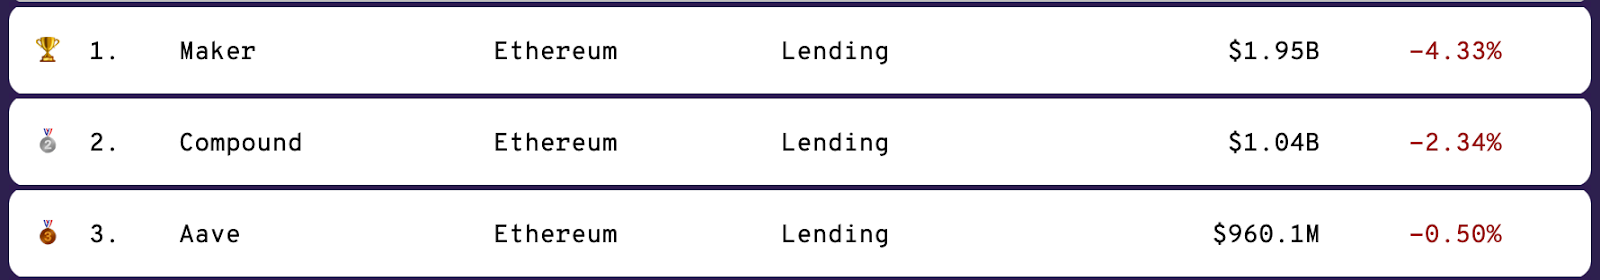 Top three decentralized lending platforms